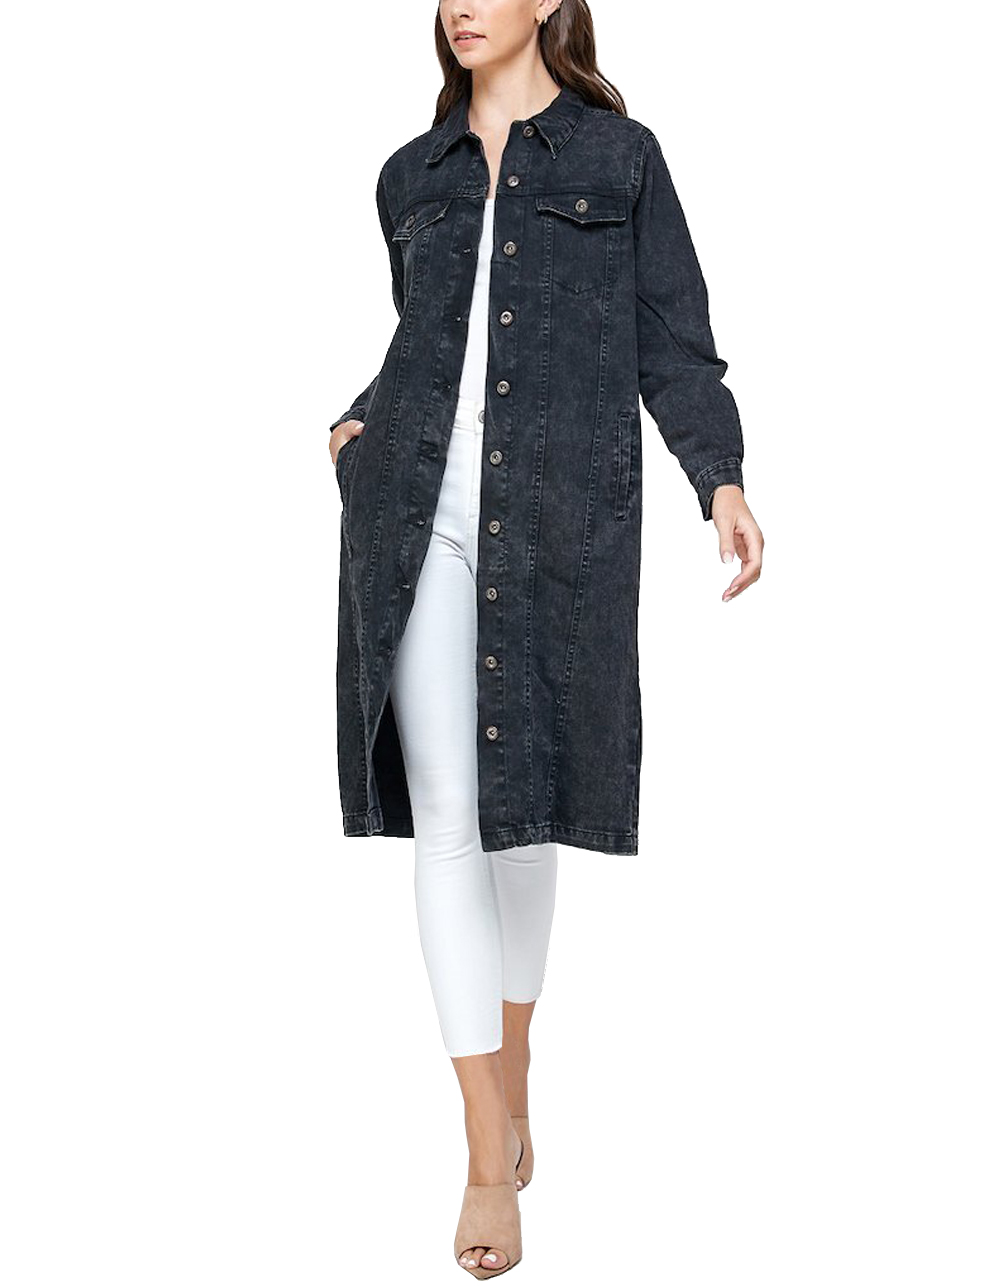 Women's Long Casual Maxi Length Denim Cotton Coat Oversize Button Up Jean Jacket (Mineral Black, S) - image 2 of 6